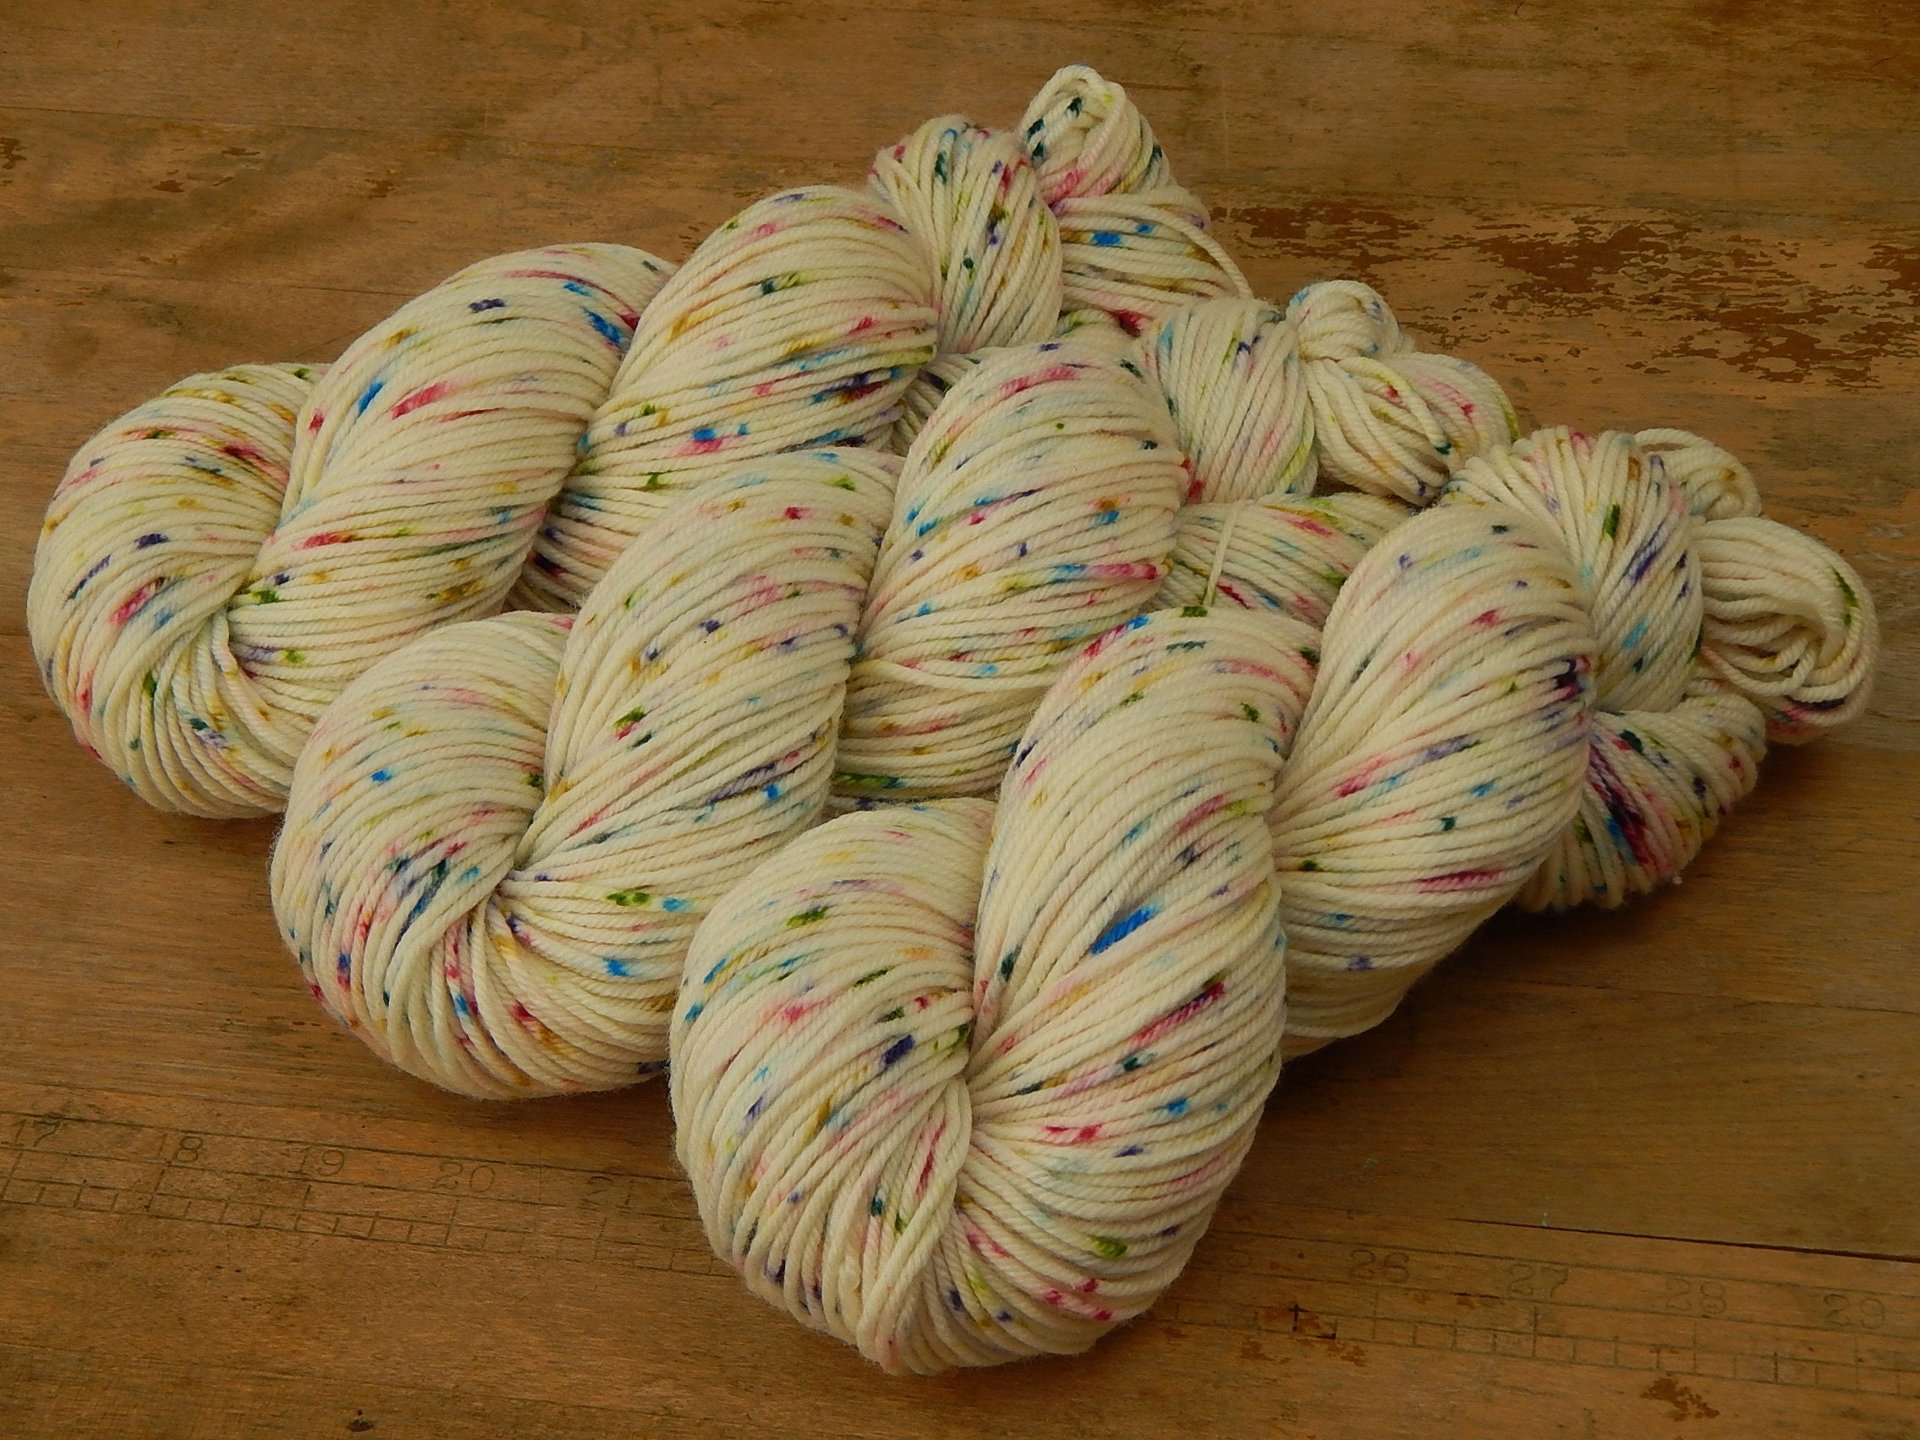 Hand Dyed Yarn, DK Weight Superwash Merino Wool - Potluck Confetti on Cream - Off White Rainbow Speckled Indie Dyed Knitting Yarn